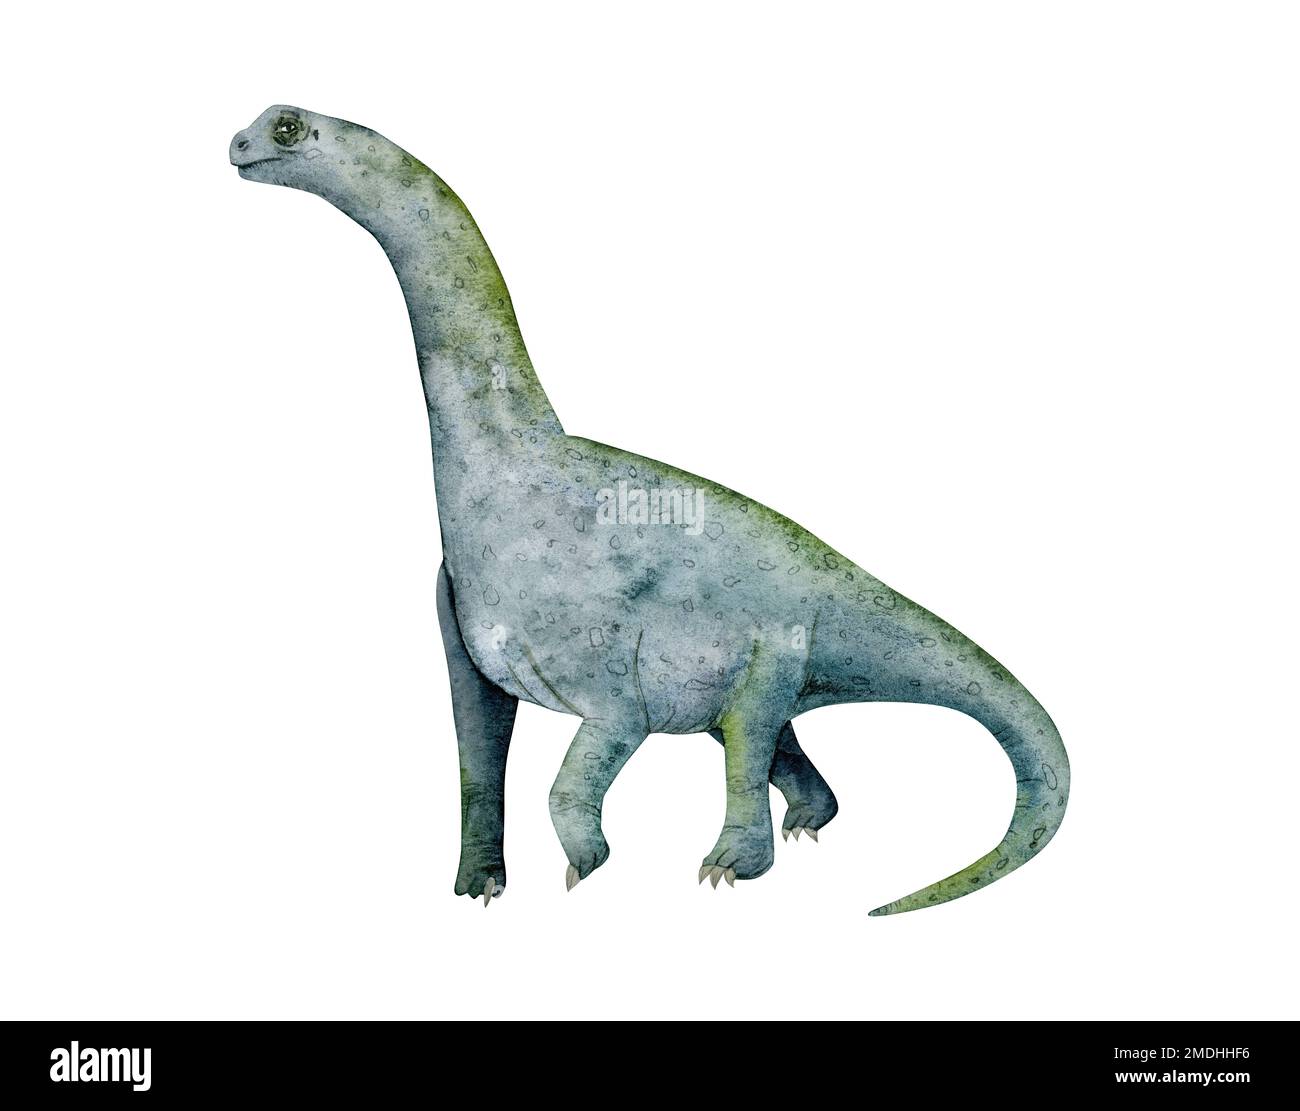 Camarasaurus sauropod dinosaur watercolor illustration isolated on white background. Brachiosaurus drawing, prehistoric herbivore animal Stock Photo